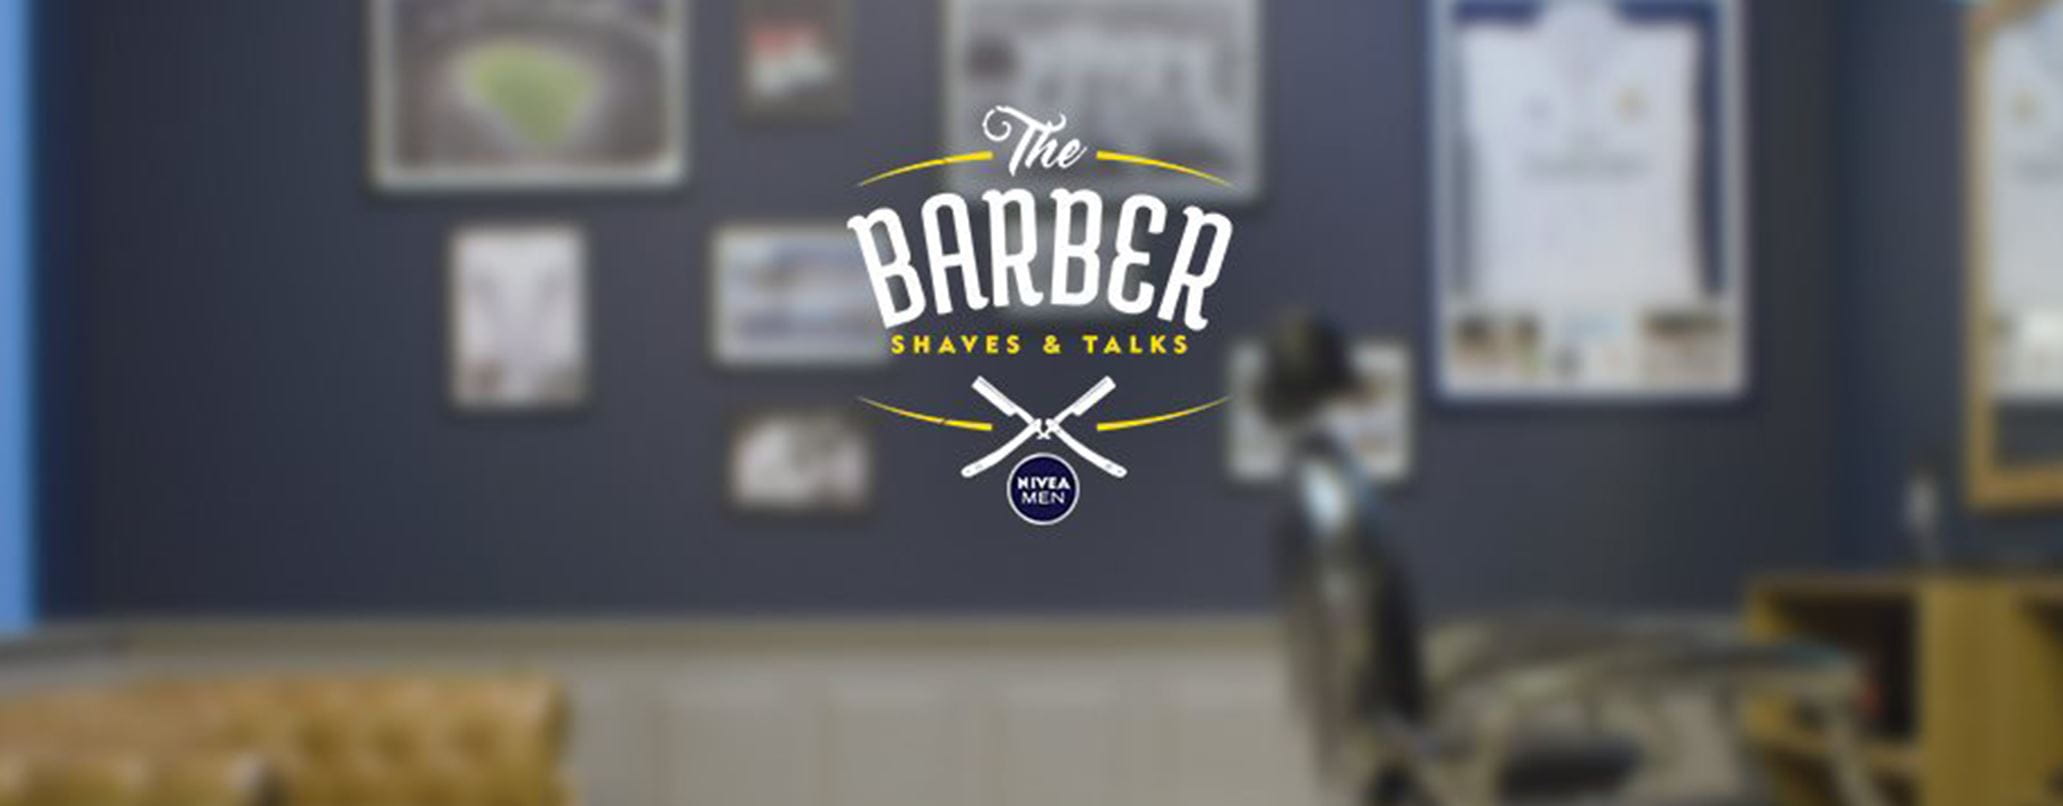 nivea-men-barbershop-header-image